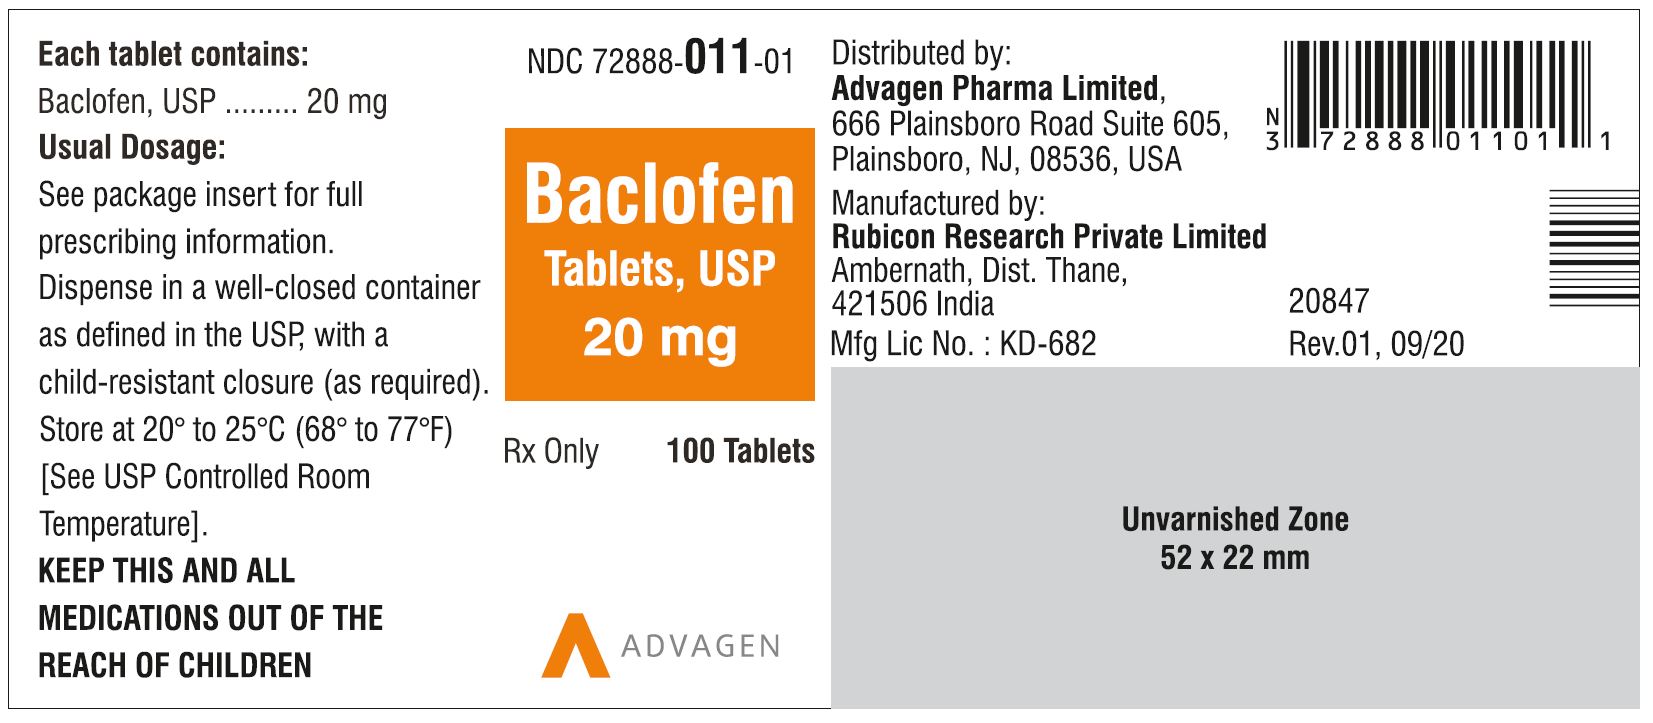 NDC 72888-011-01 - Baclofen Tablets, USP 20 mg - 100 Tablets